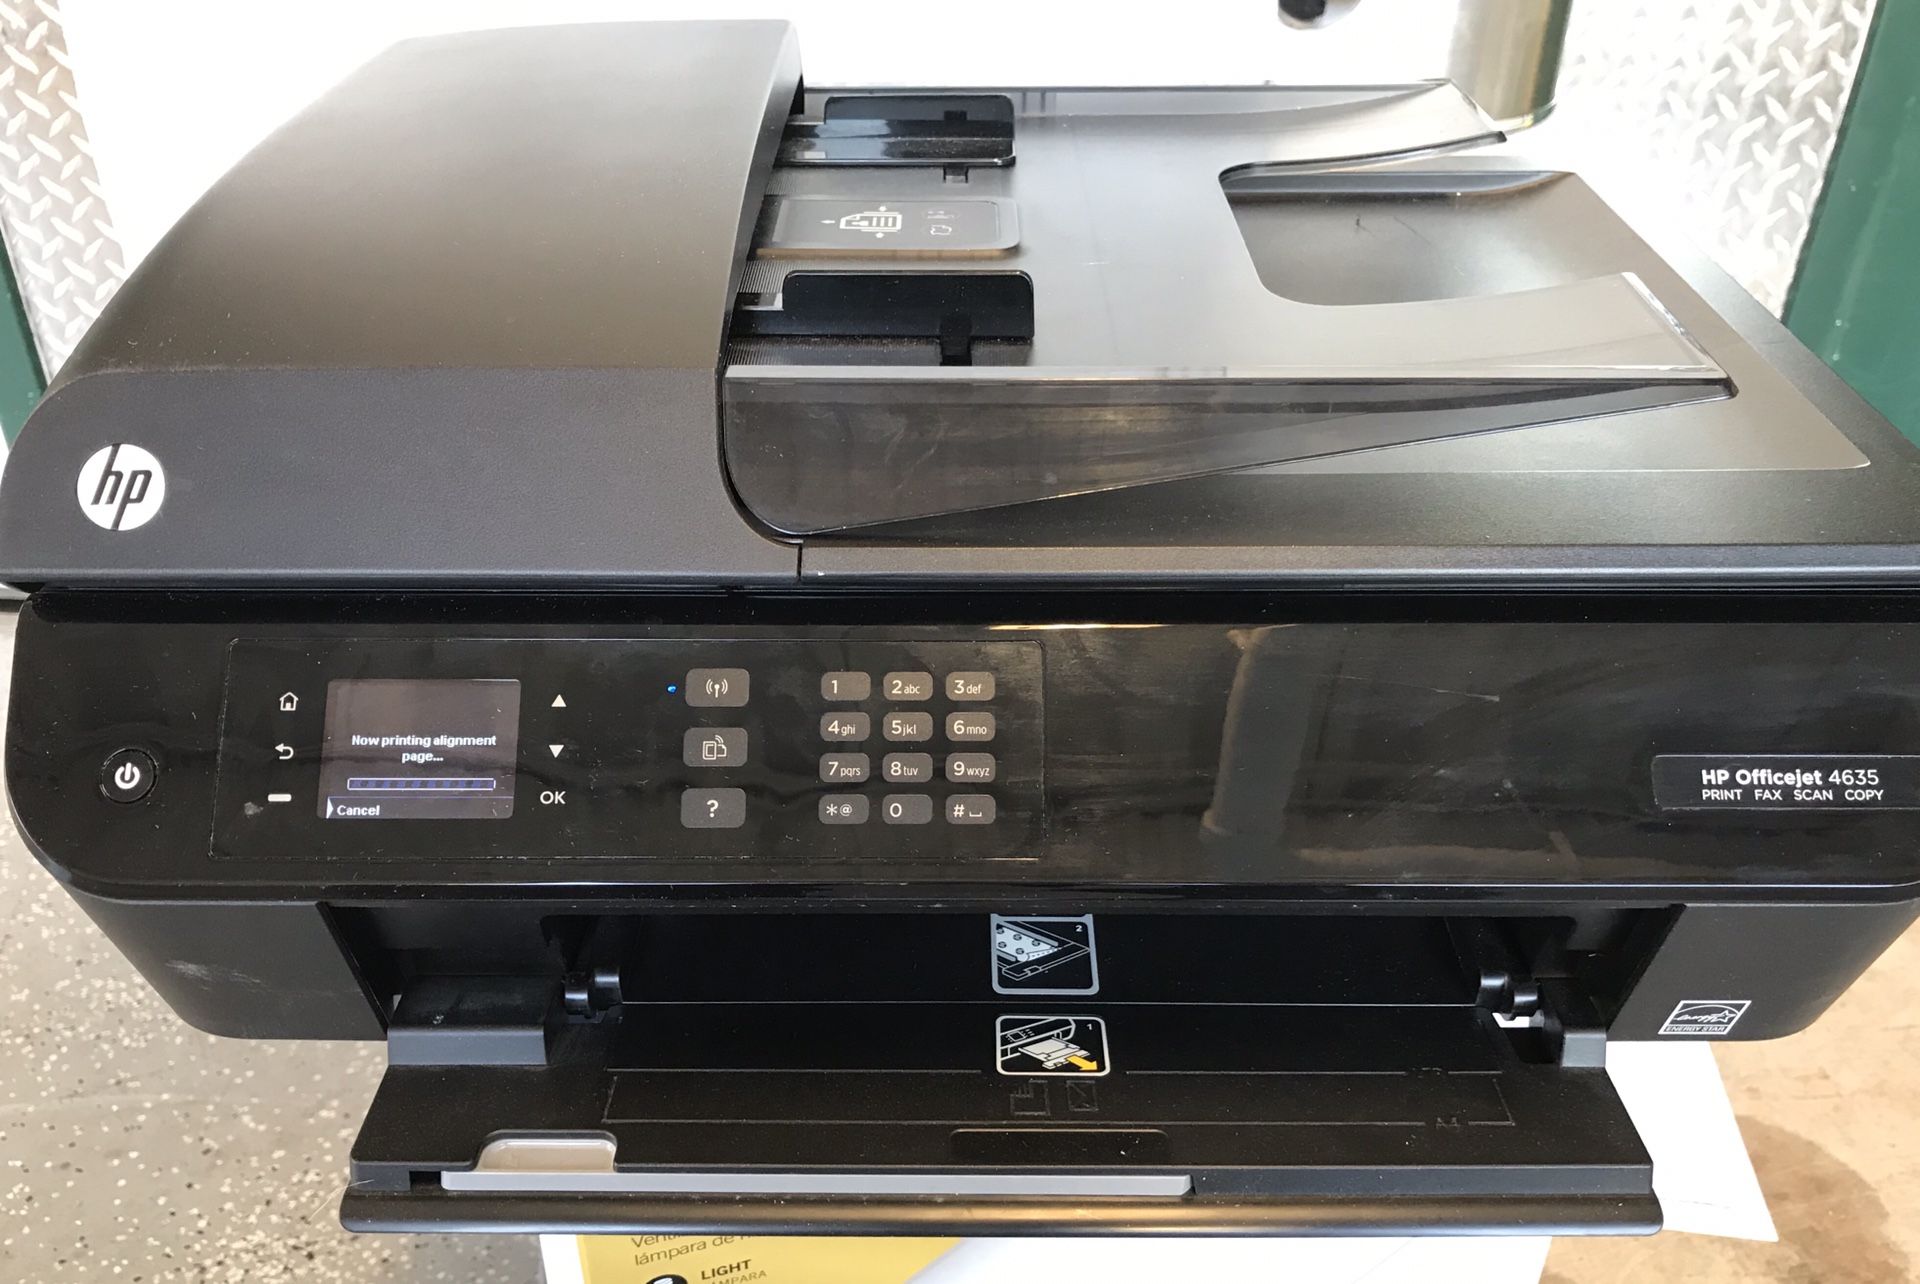 Hp Officejet 4635 Wireless E All In One Inkjet Printer Scan Copy Fax For Sale In Lanham Md 7915